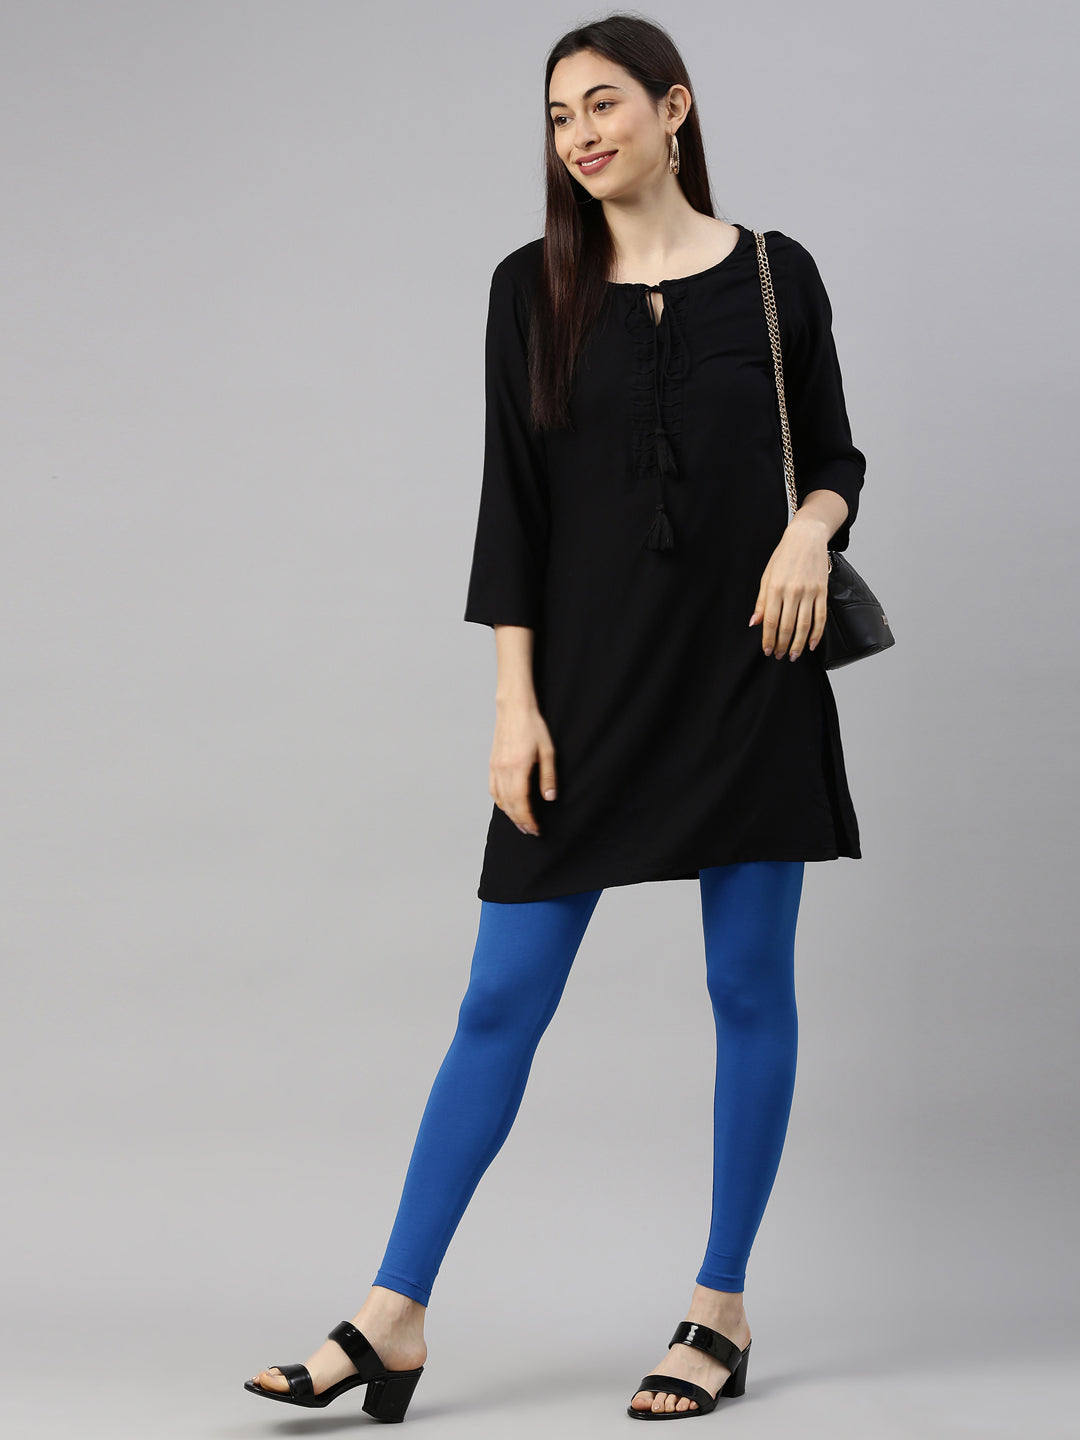 Womens 4 Way Stretch Ankle Leggings - R Blue